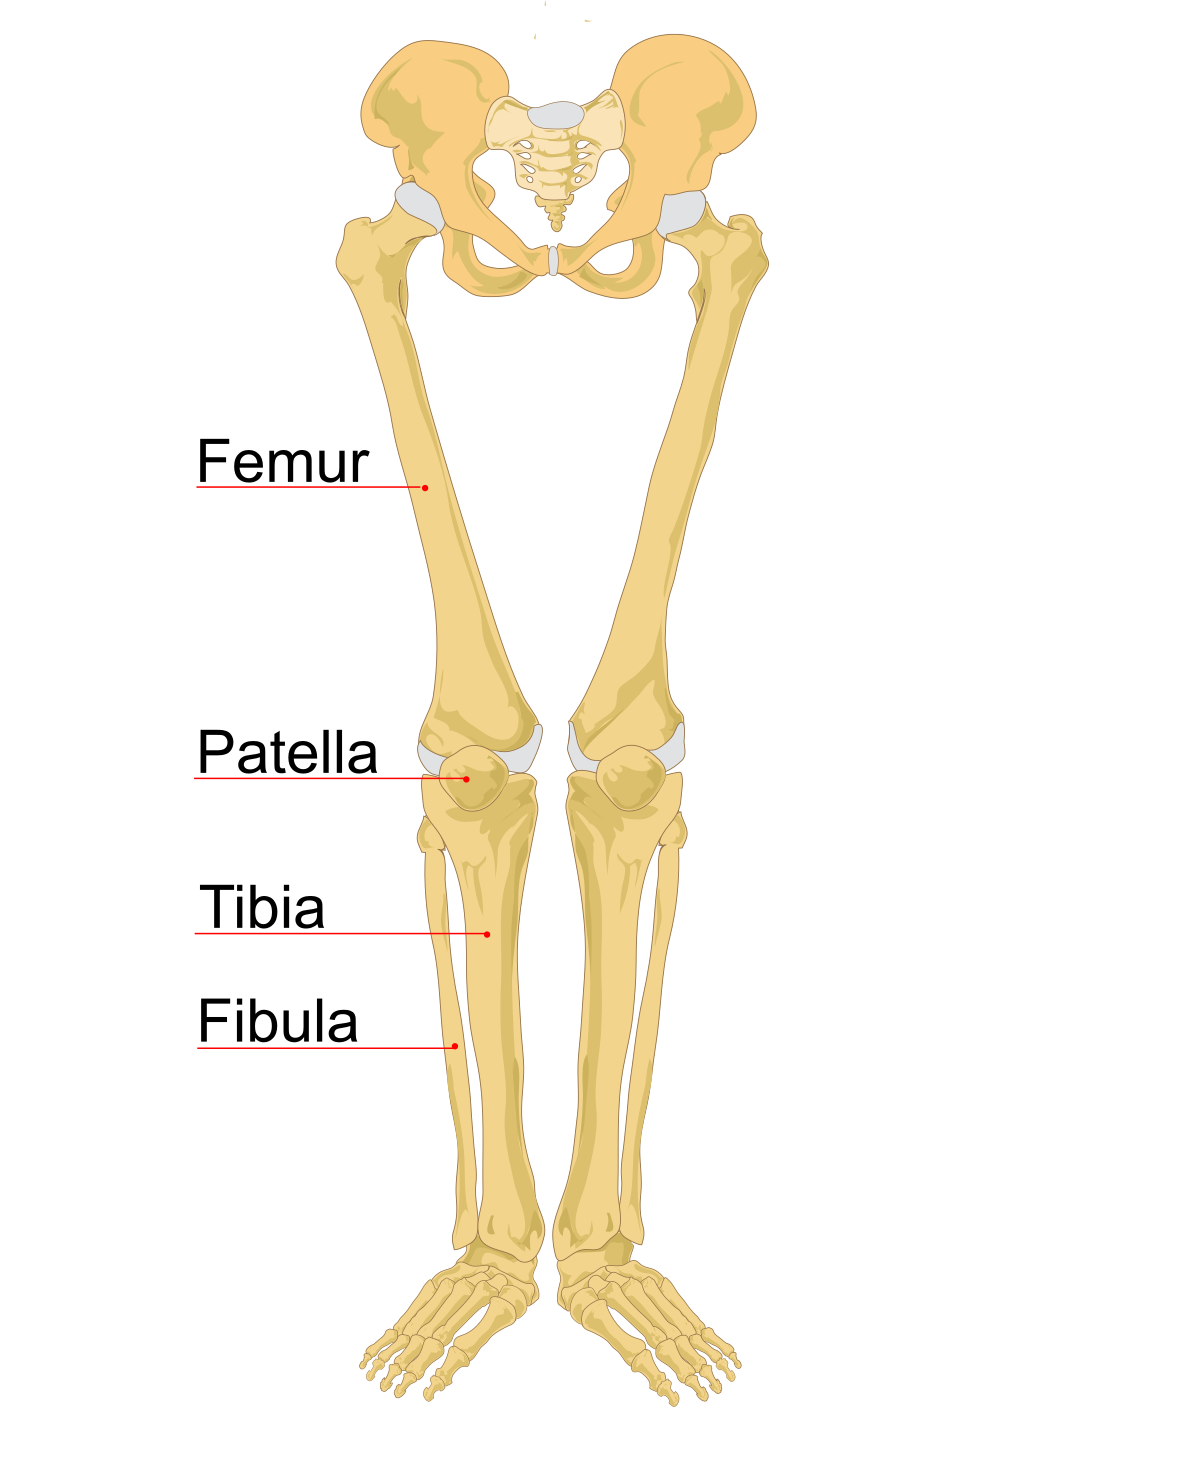 File:1200px-Human leg bones labeled.svg.png